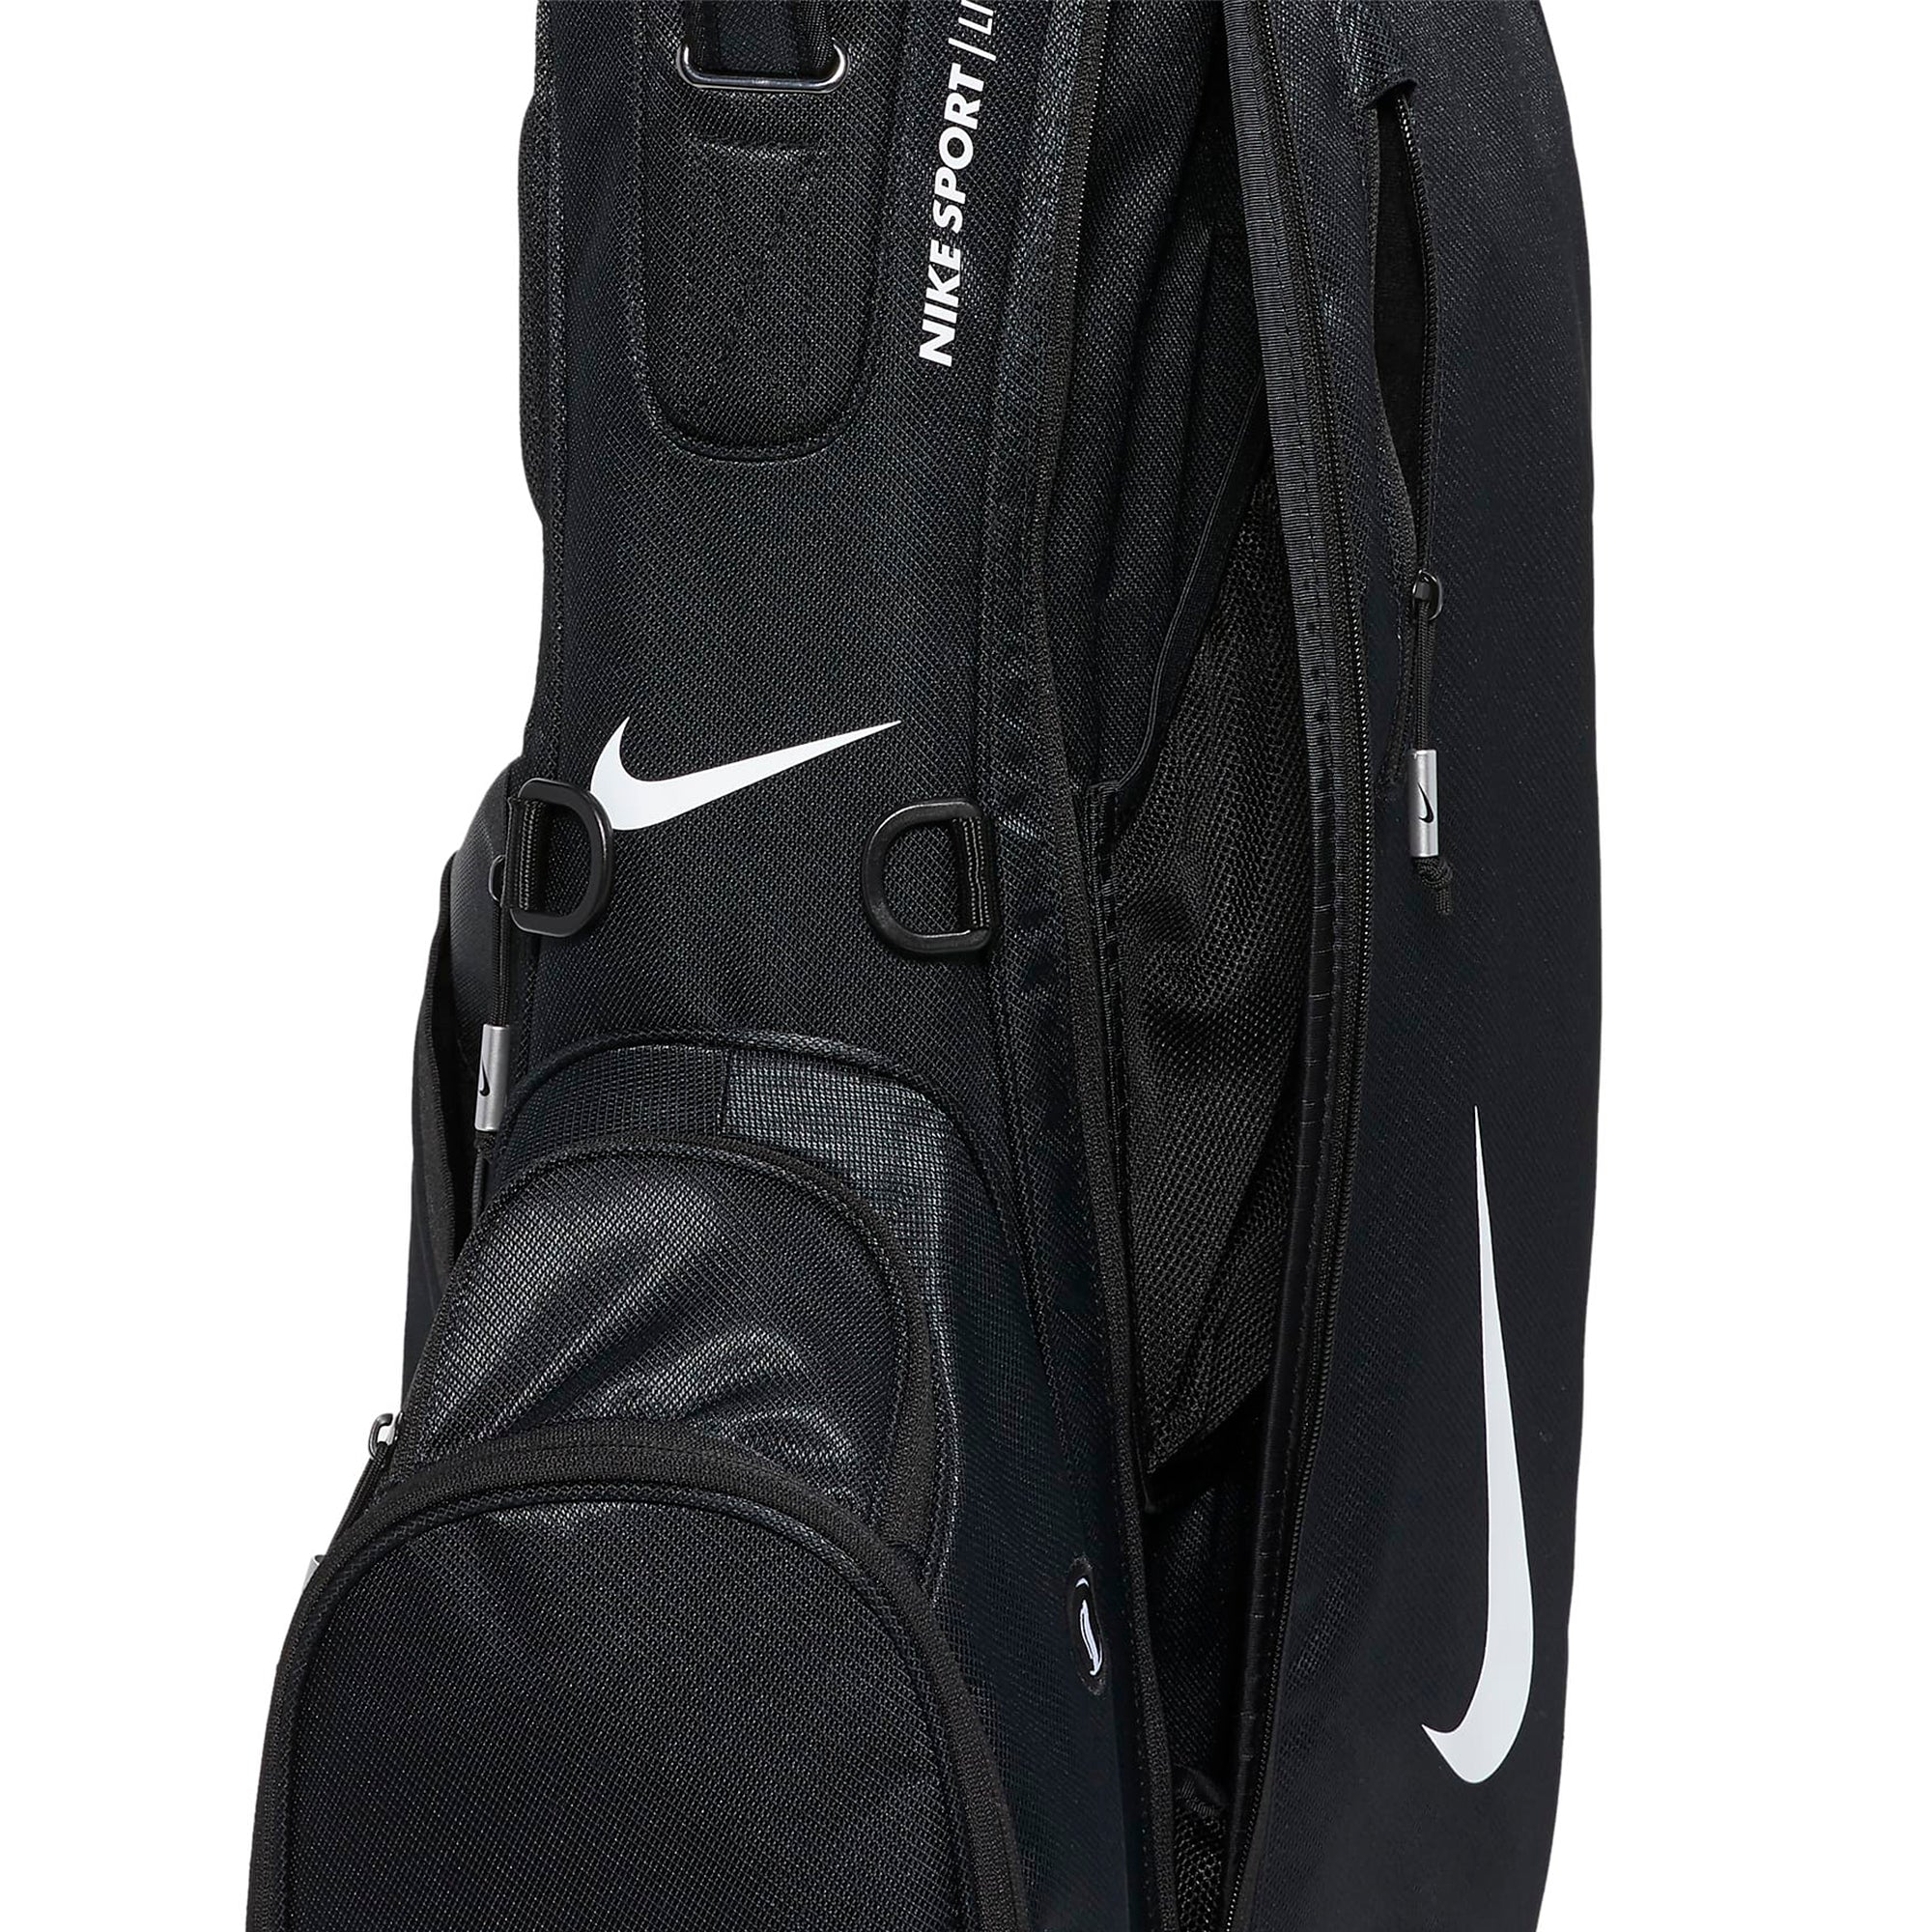 Nike Golf Sport Lite Stand Bag